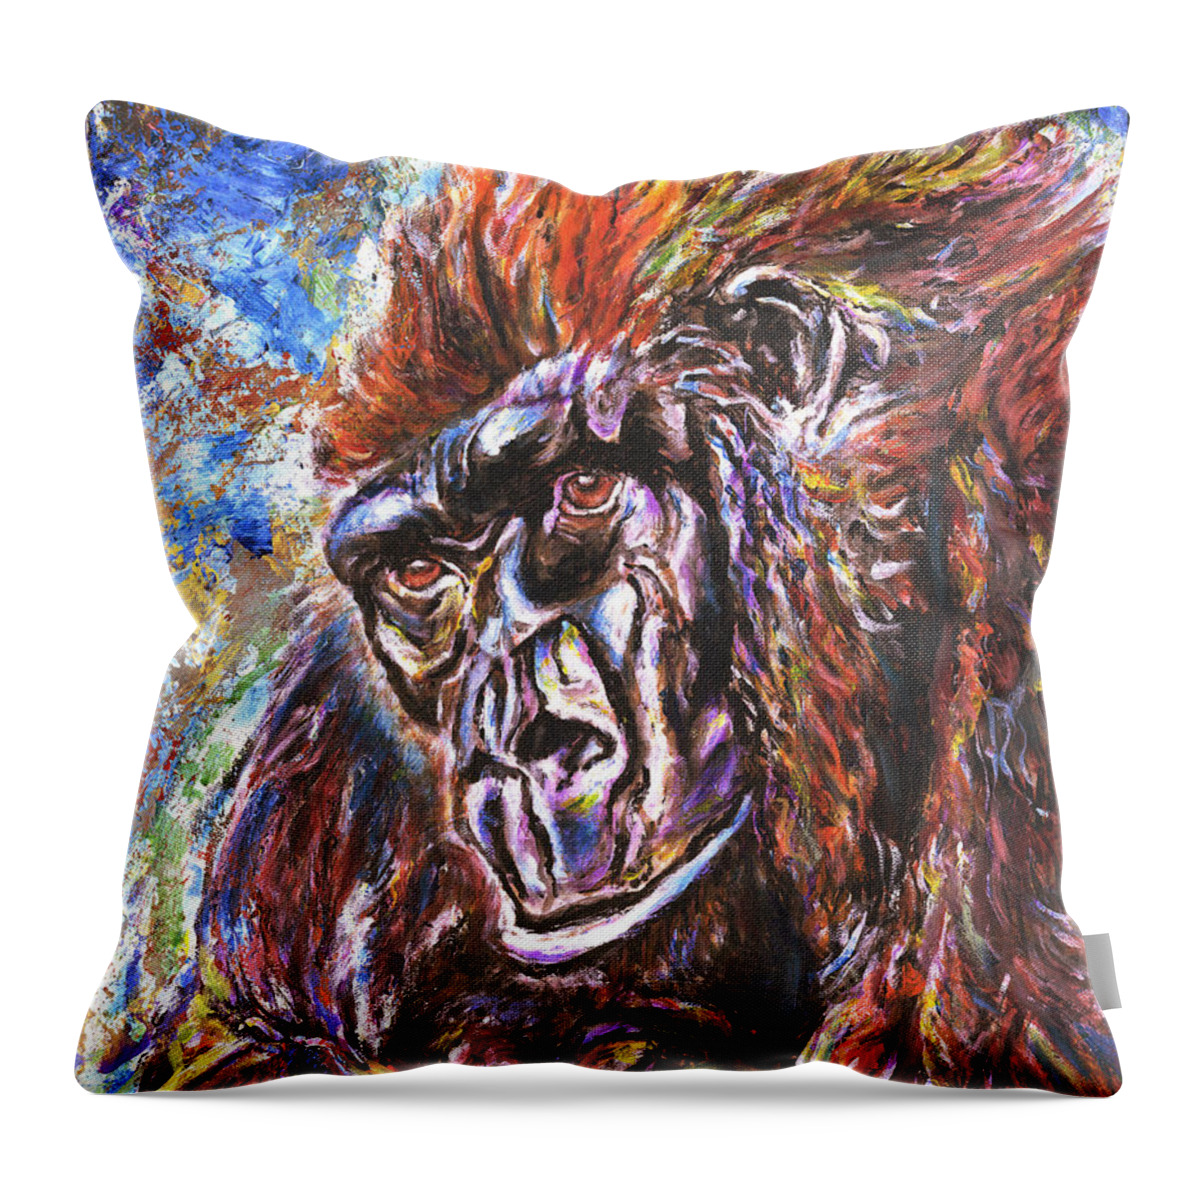 African Lowlands Gorilla Throw Pillow featuring the painting Lowlands Gorilla by John Bohn